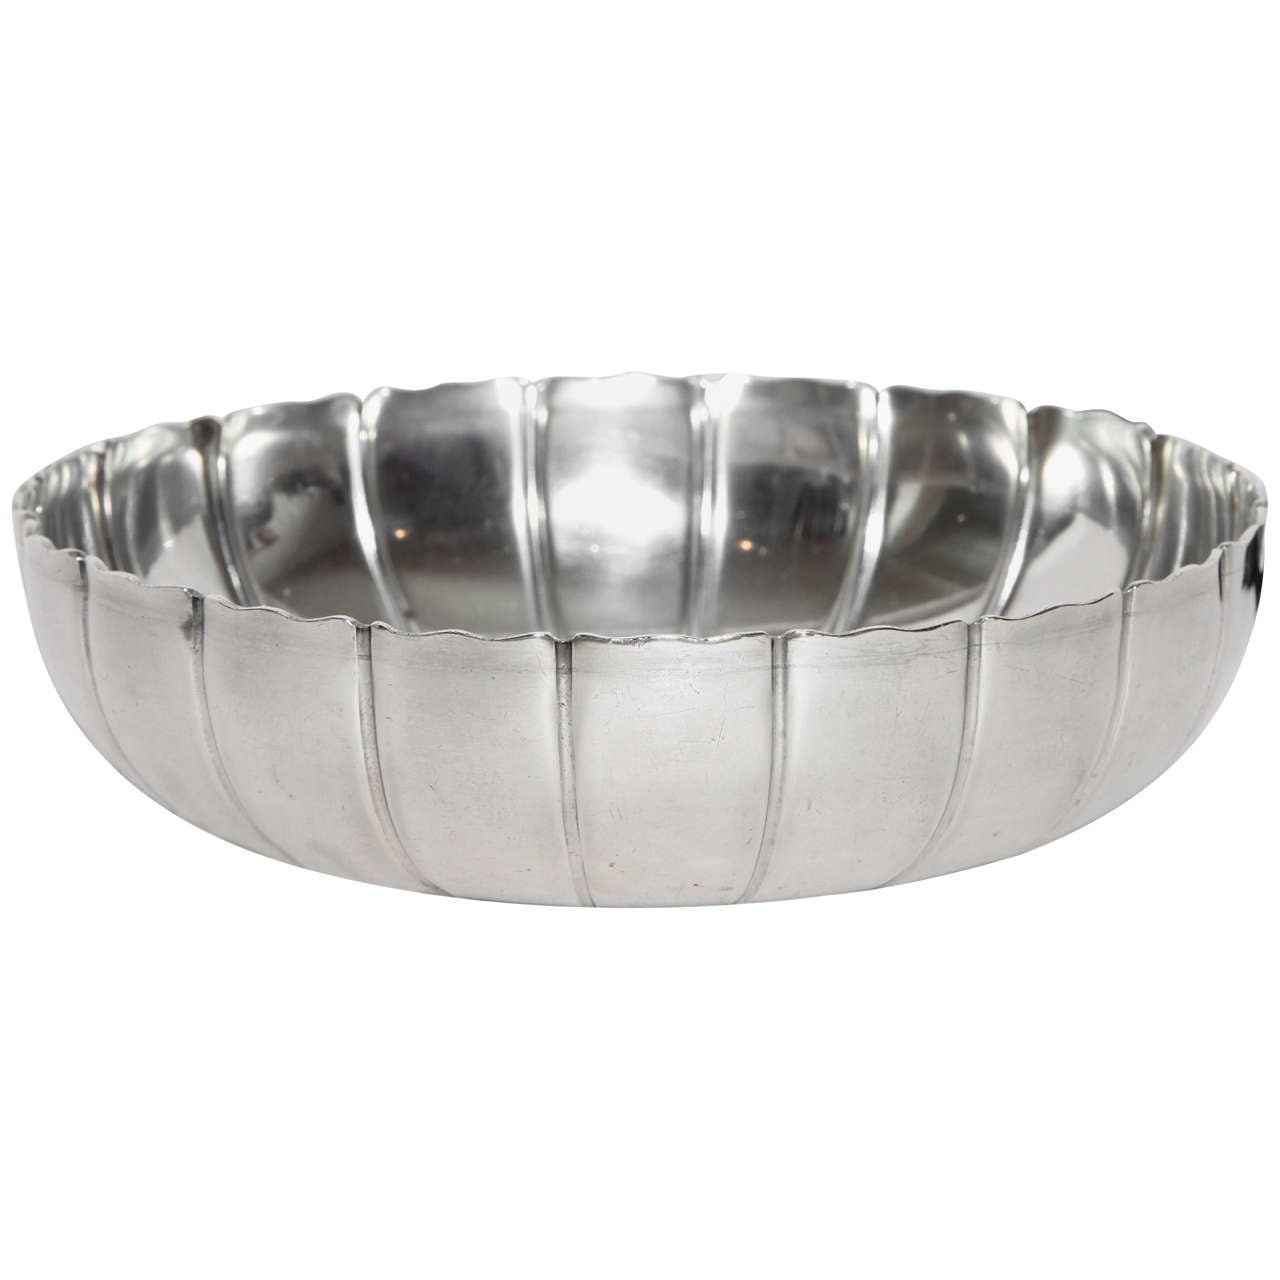 Jean Francois Veyrat French Art Deco Sterling Silver Bowl